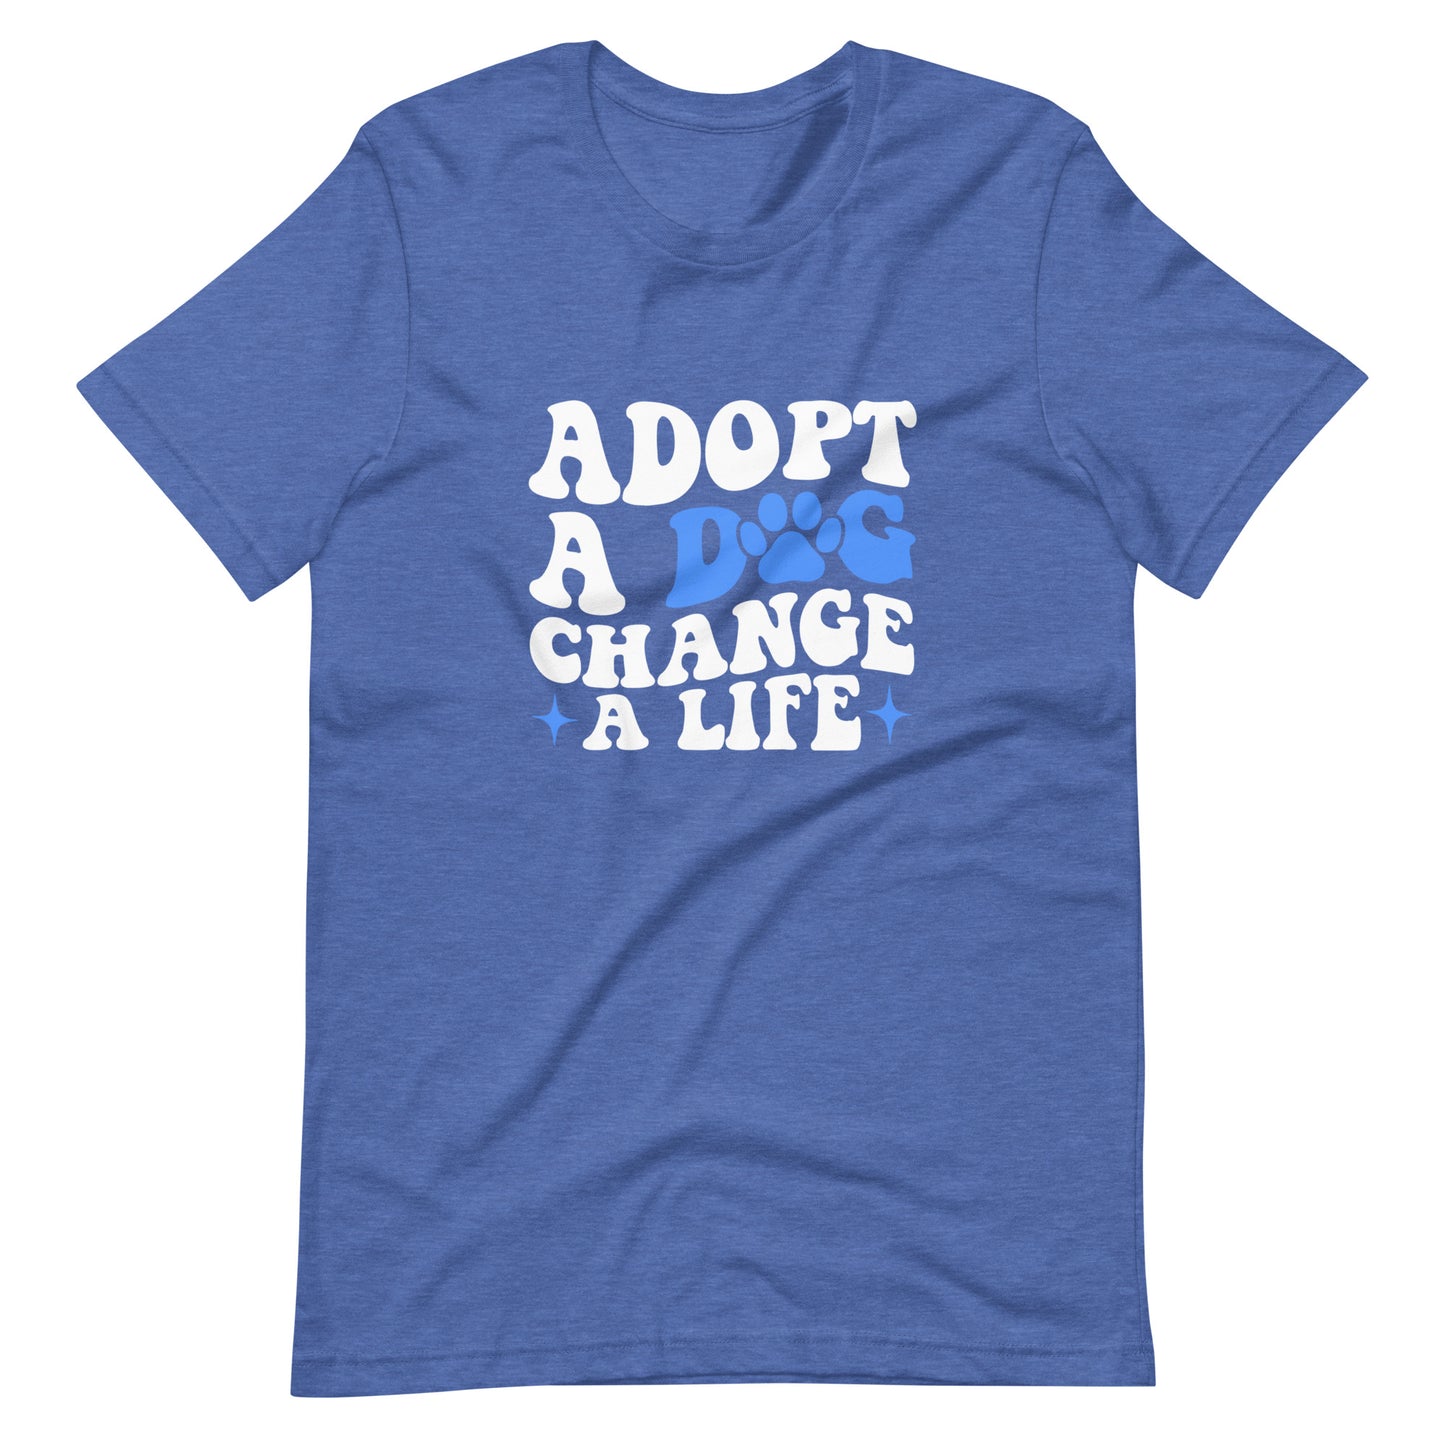 Adopt a dog change a life T-shirt